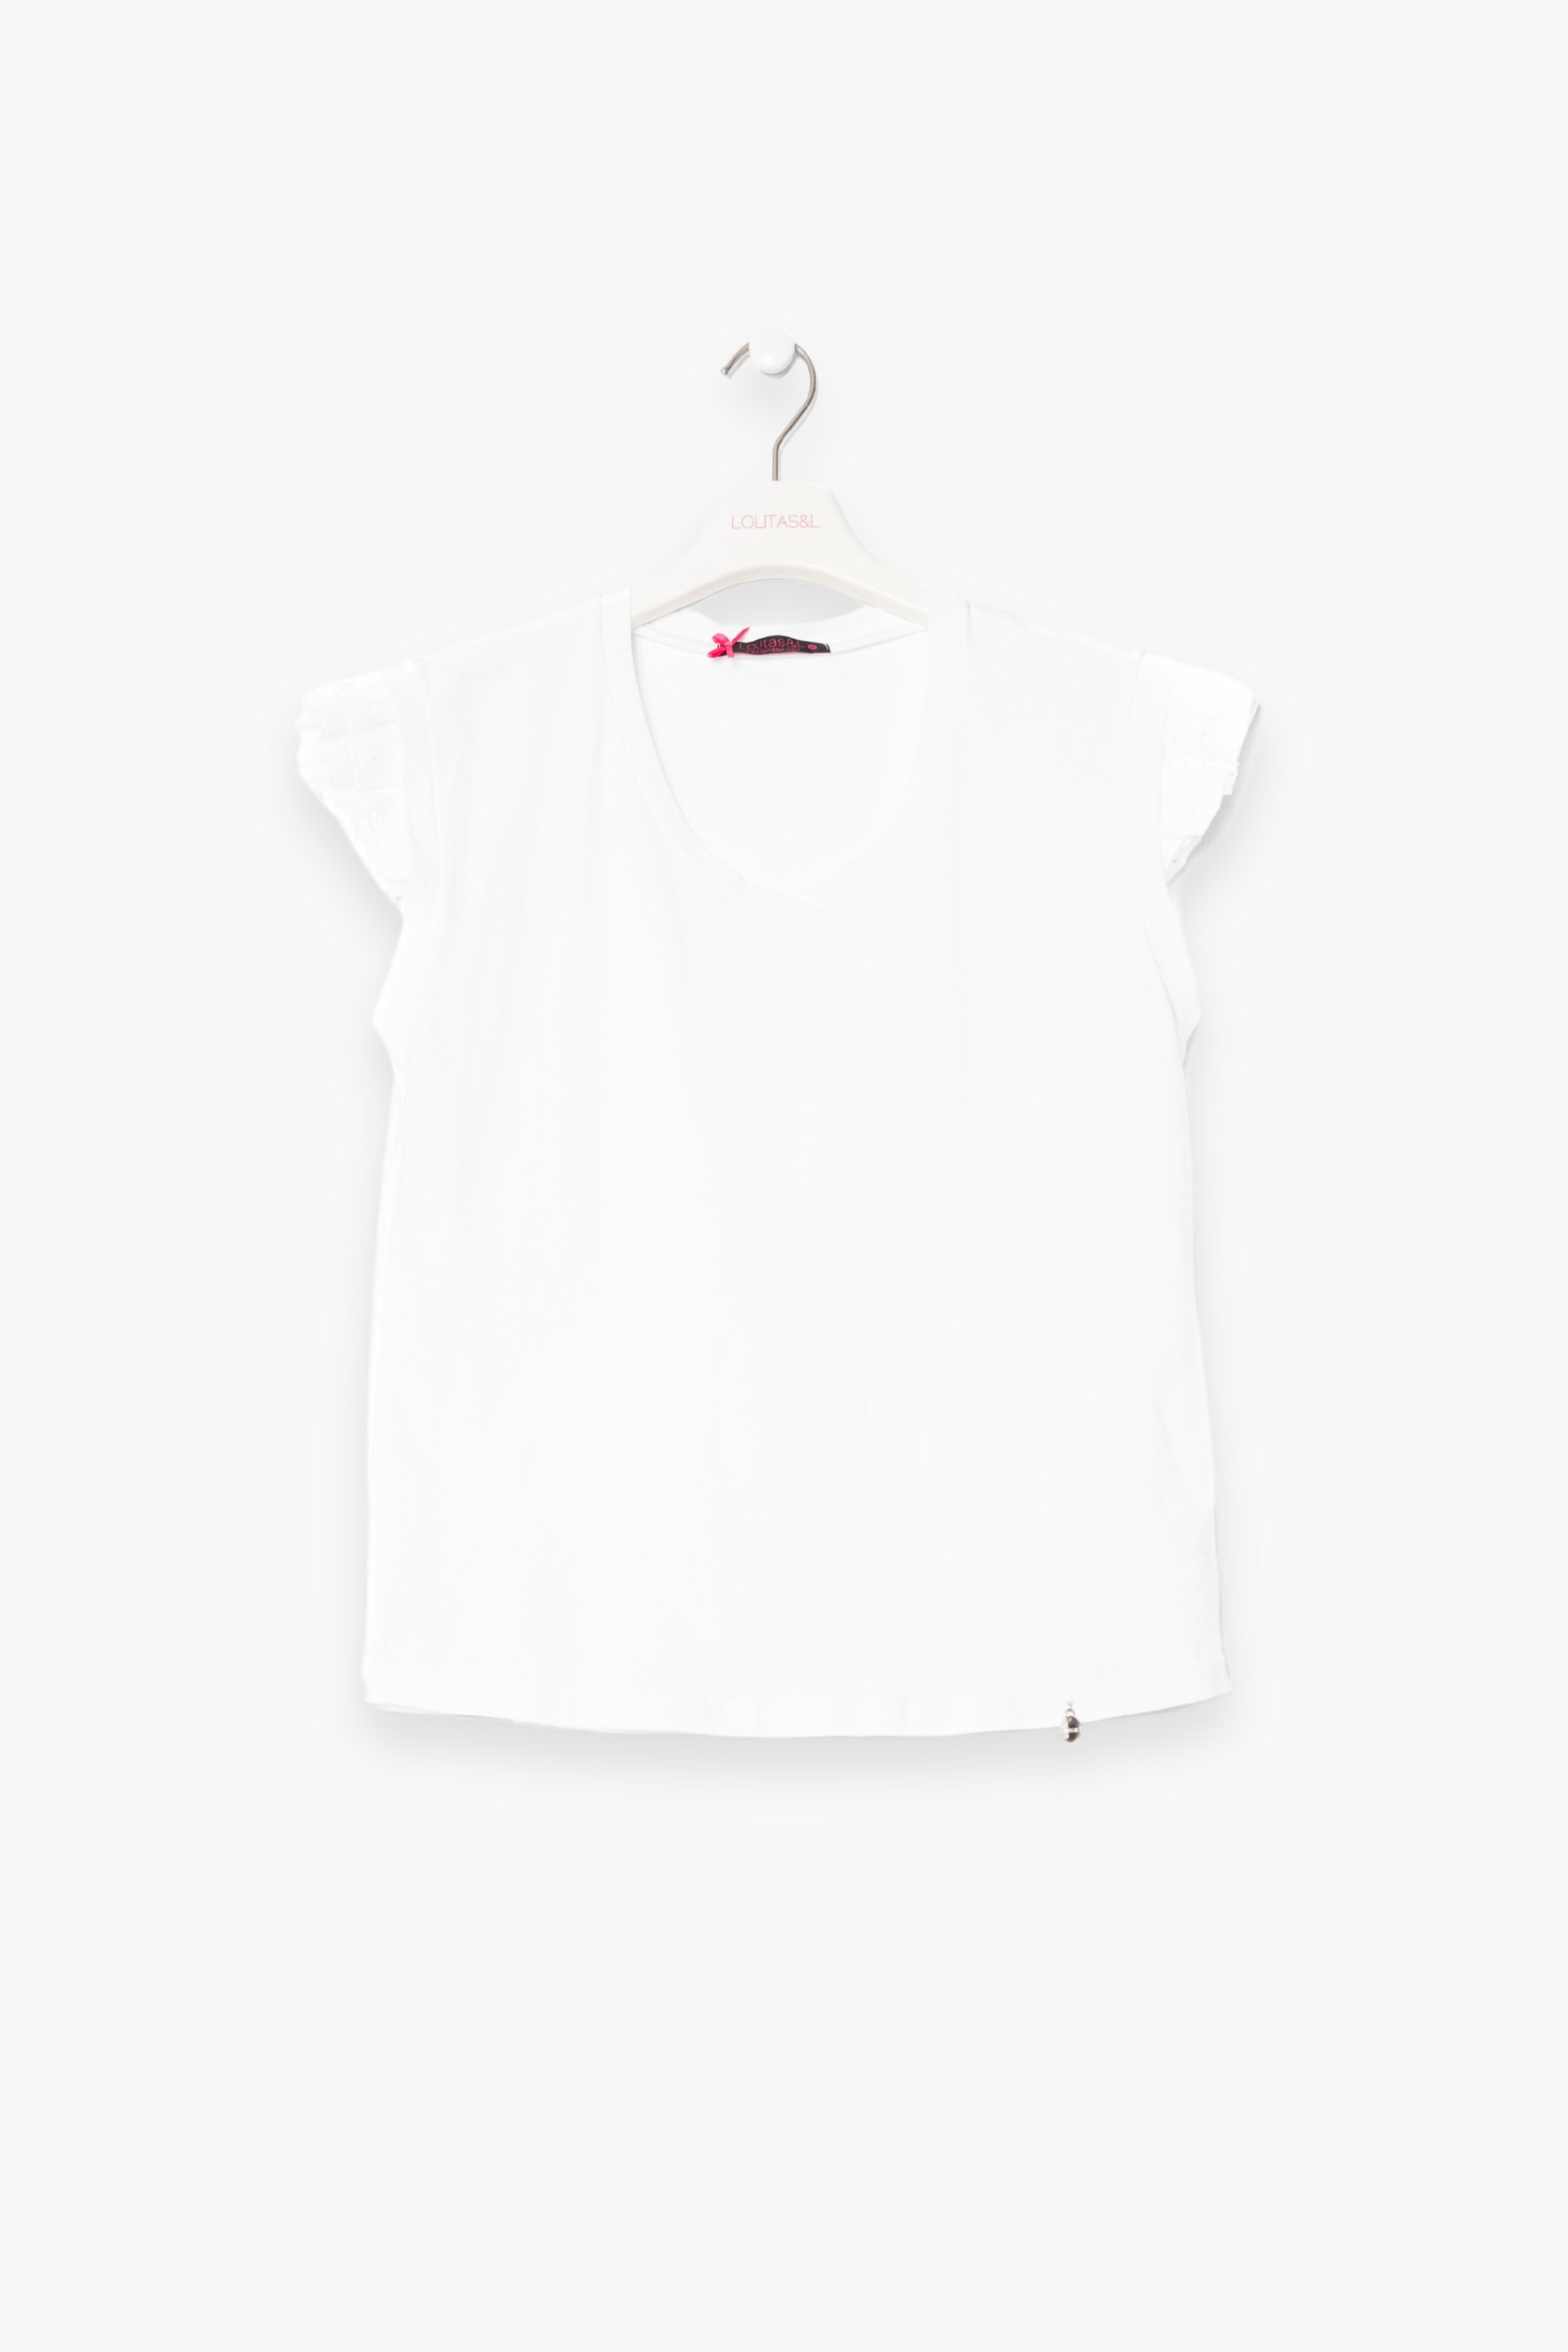 Camiseta blanca manga corta con volante grogre LolitasyL - lolitasyl.com